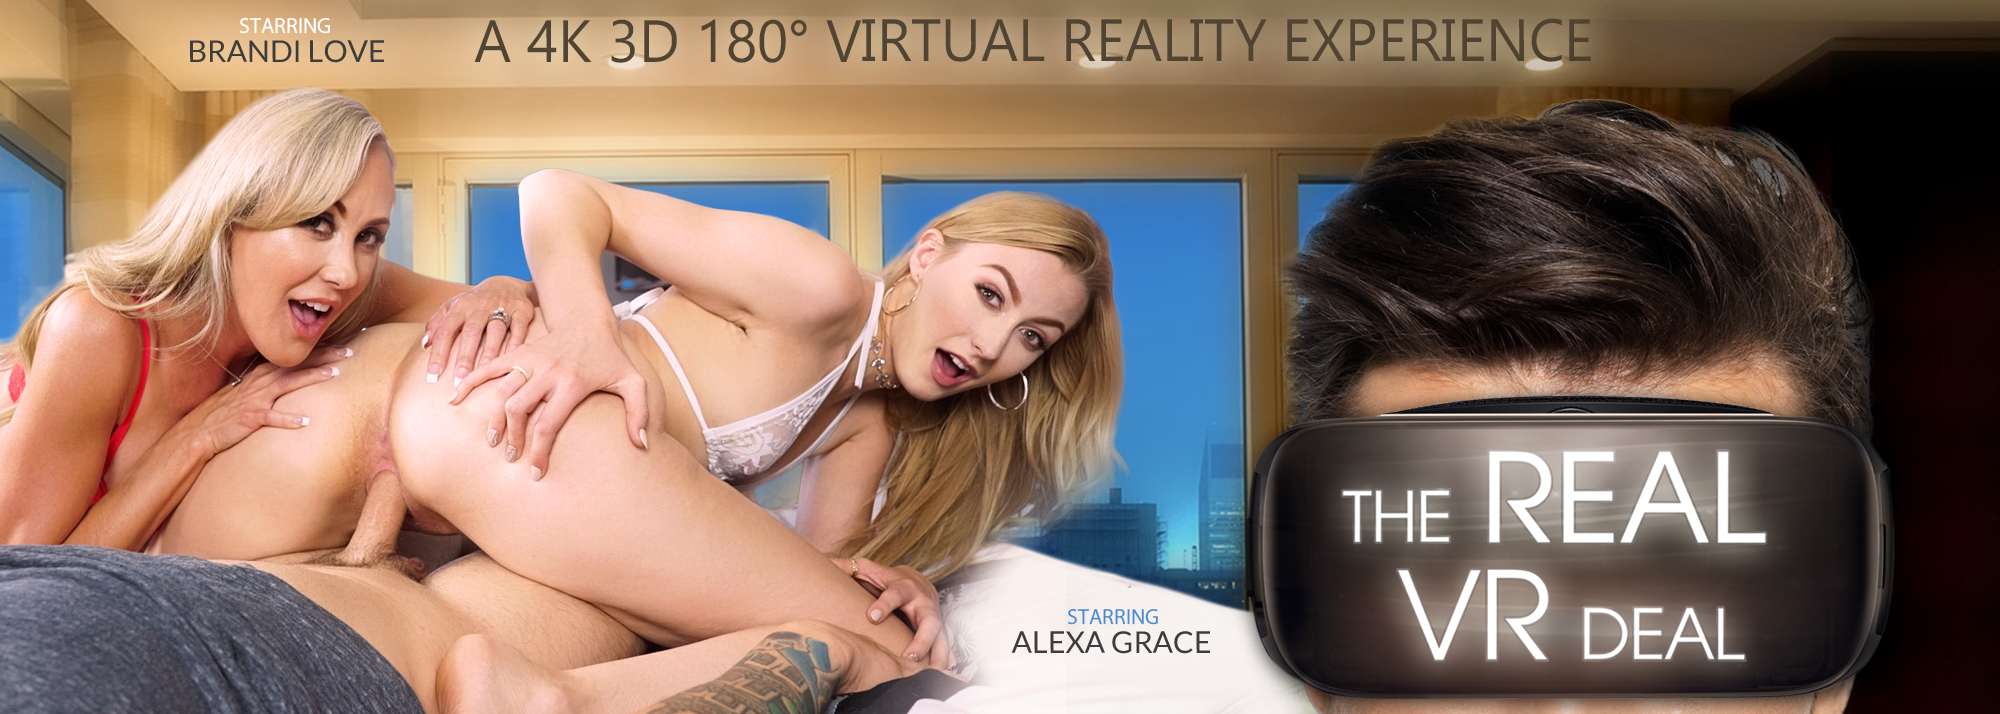 The Real VR Deal - VR Porn Video, Starring: Brandi Love, Alexa Grace